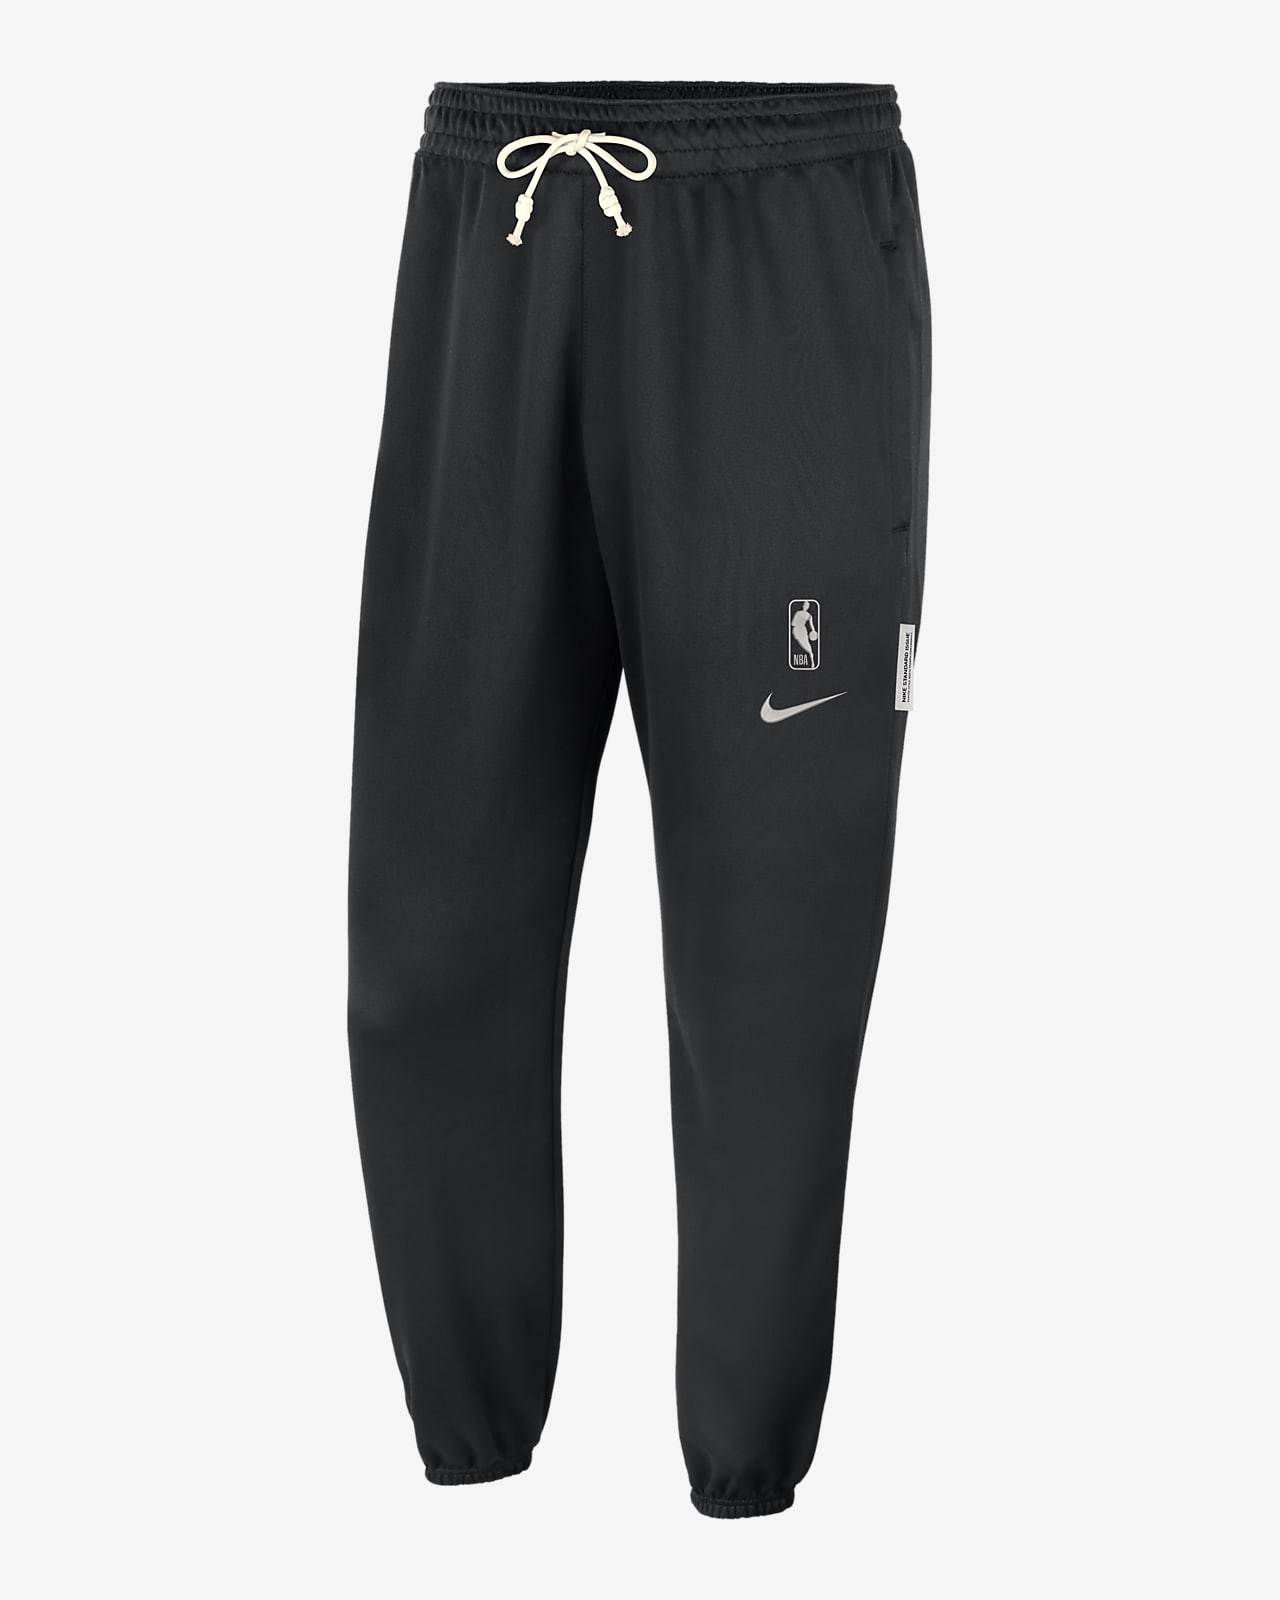 Nike NBA Authentics Compression Pants Men's White/Black New without Tags  2XLT 322